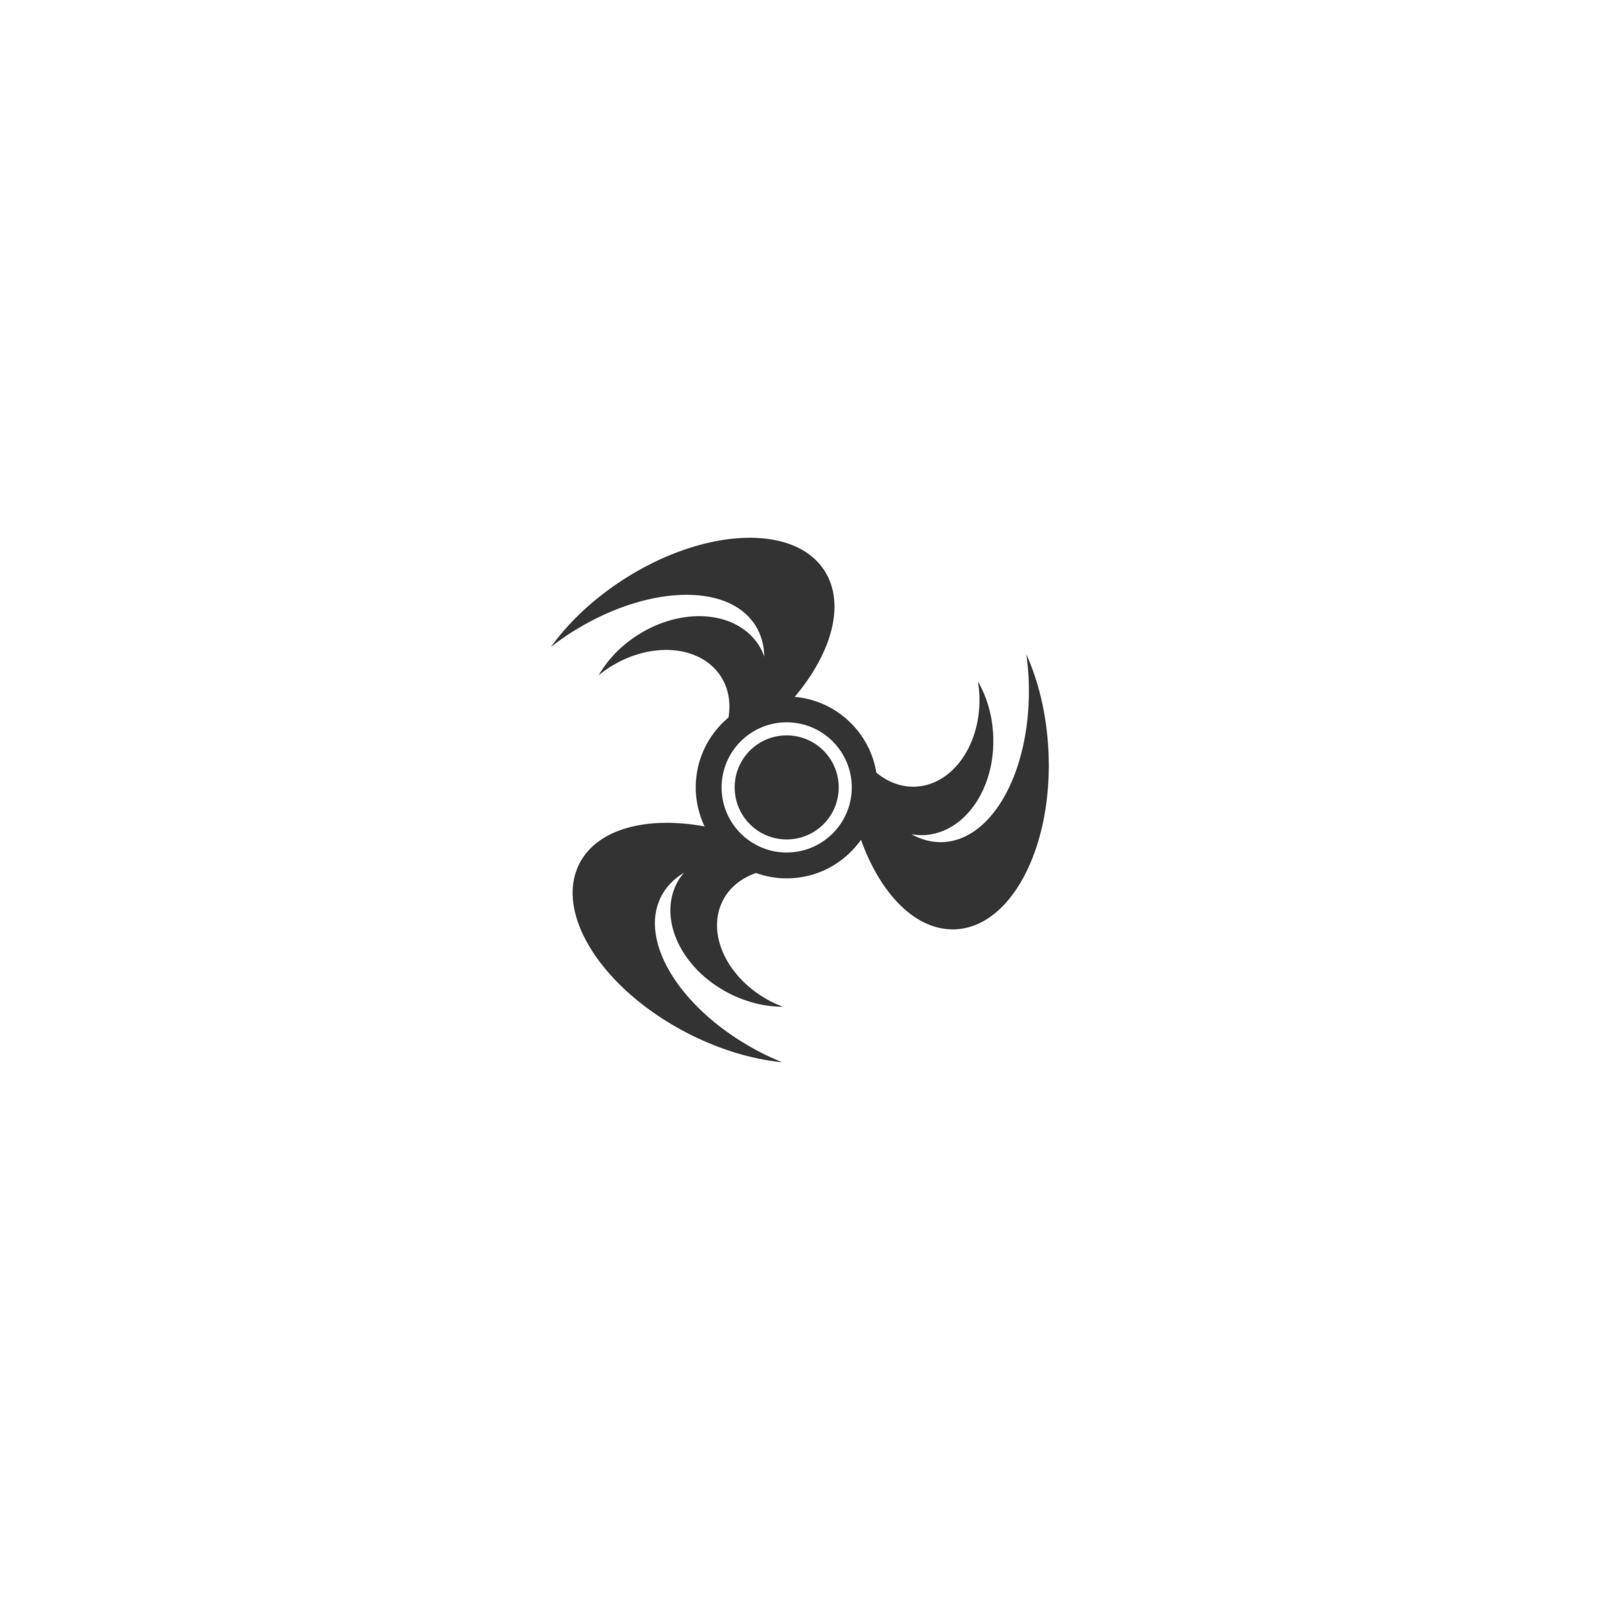 Fan icon logo flat design template by bellaxbudhong3